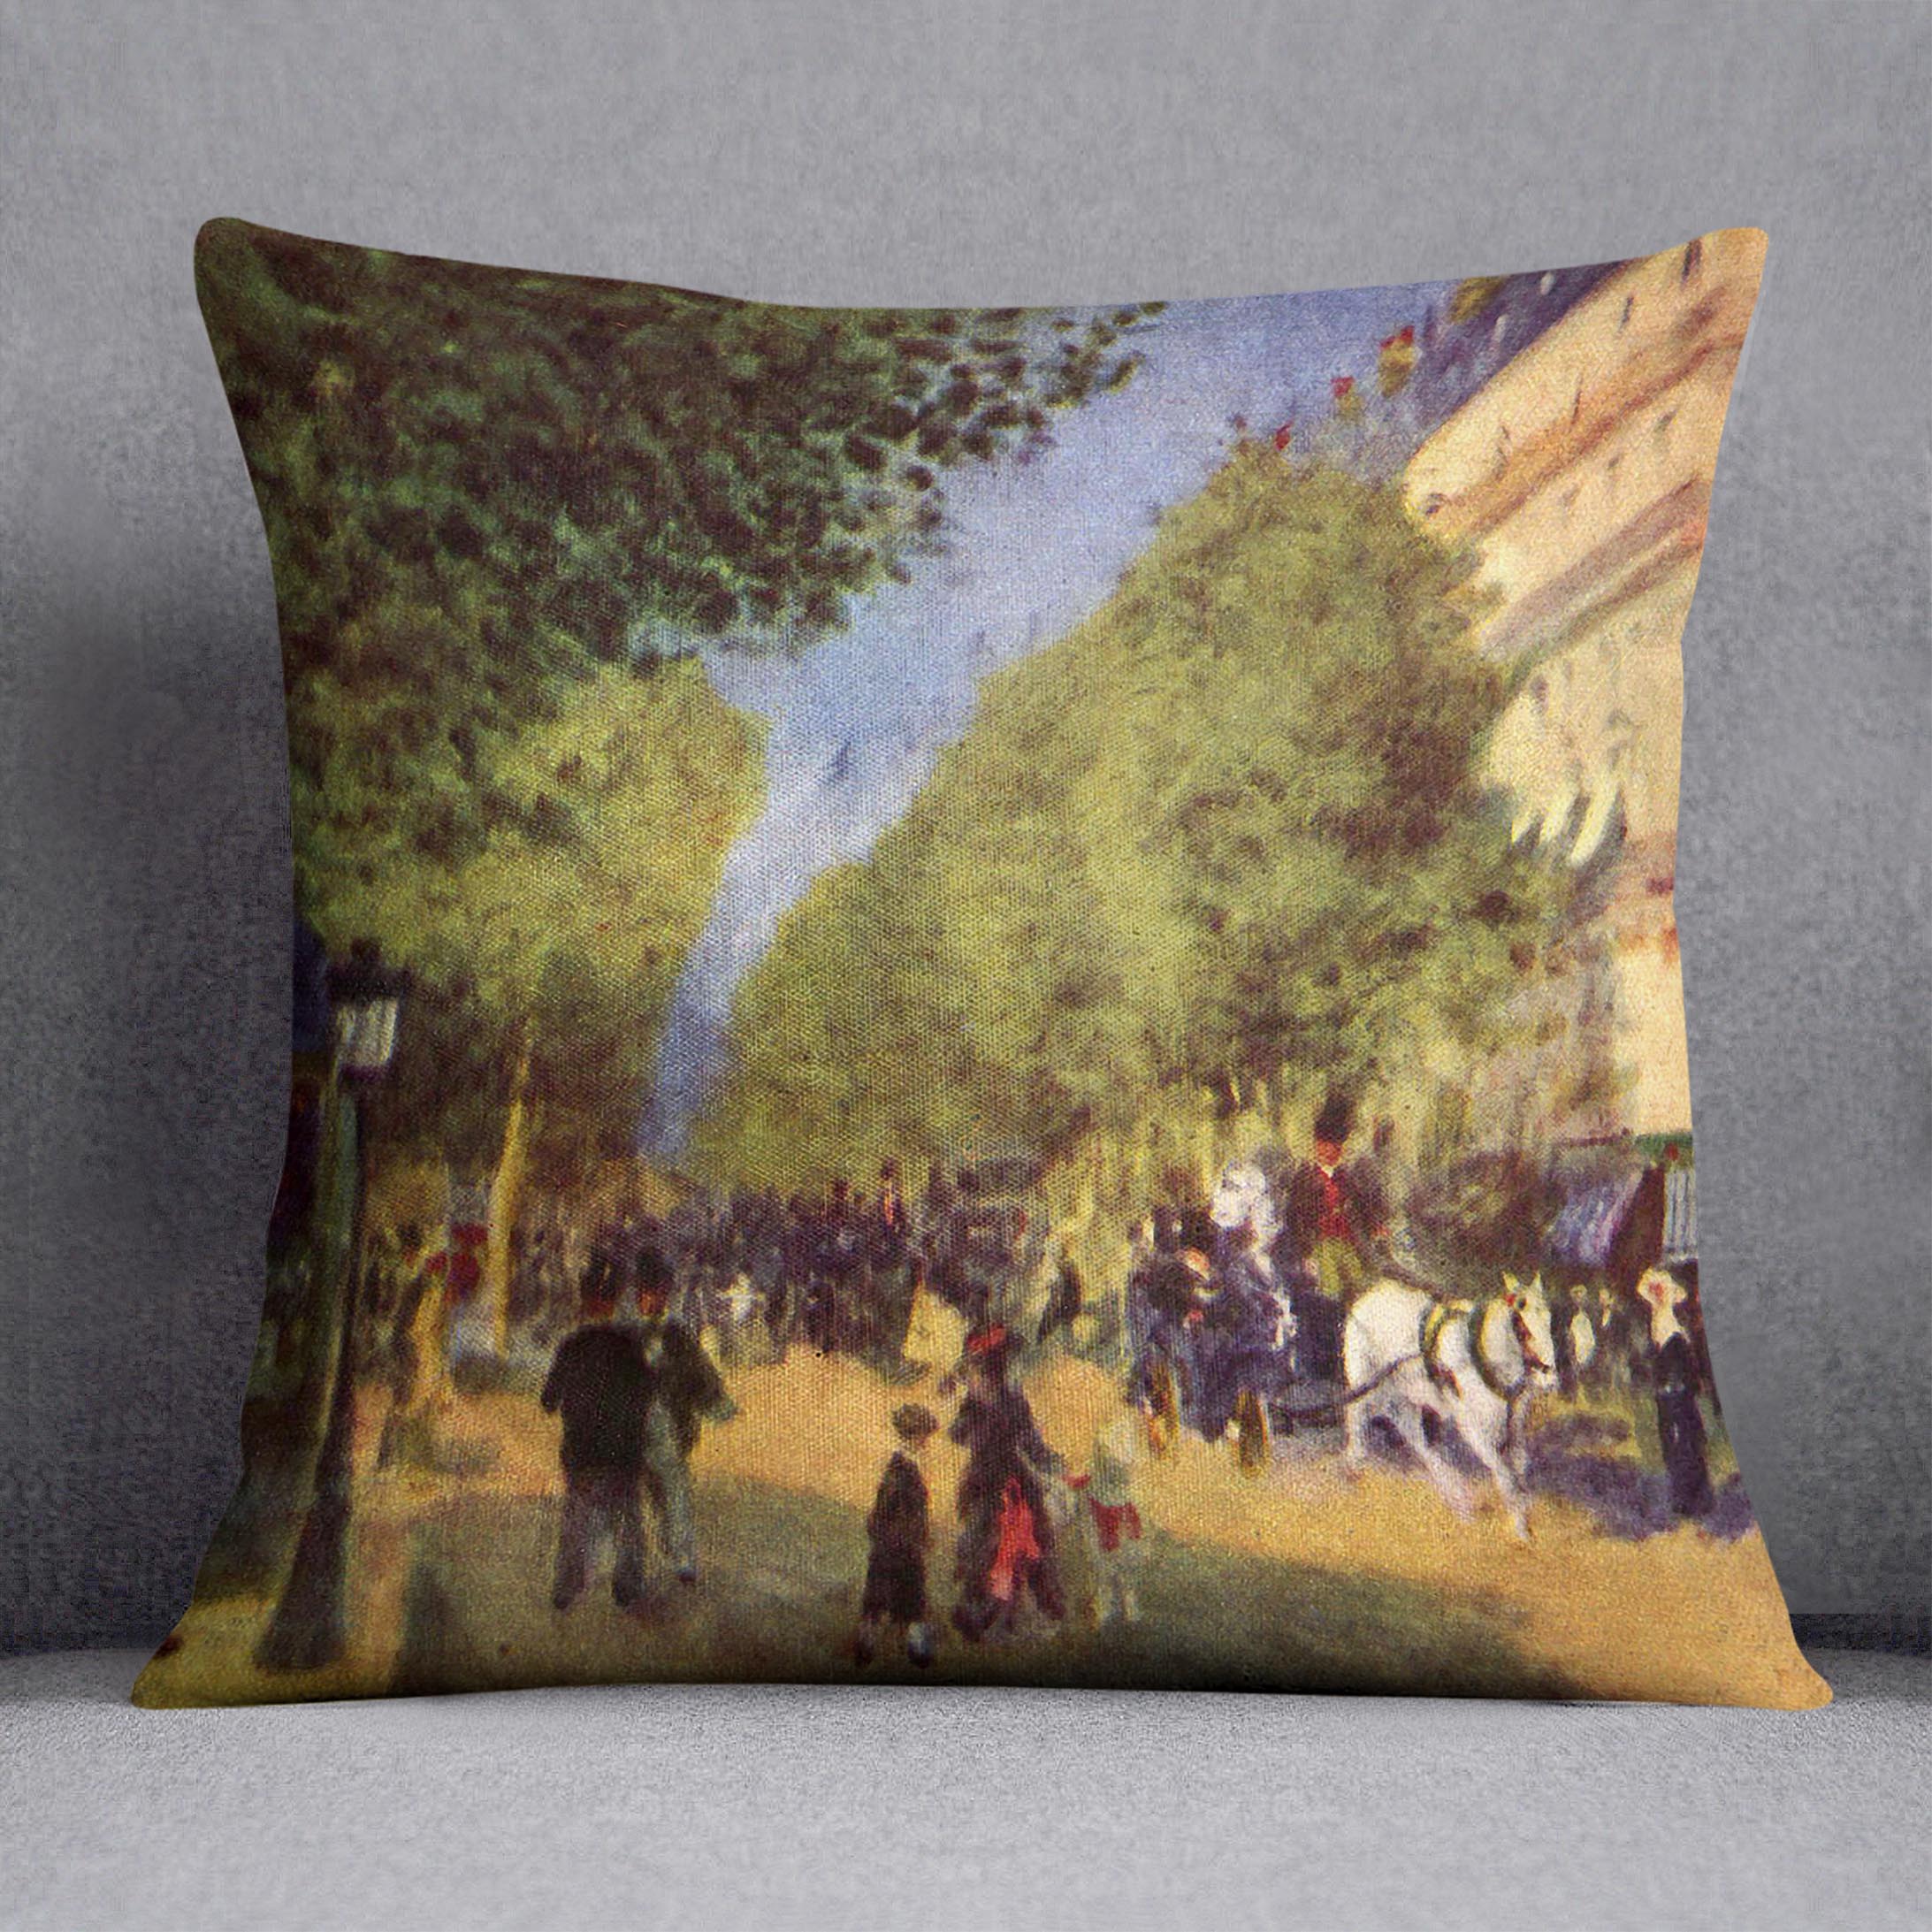 The big boulevards by Renoir Cushion